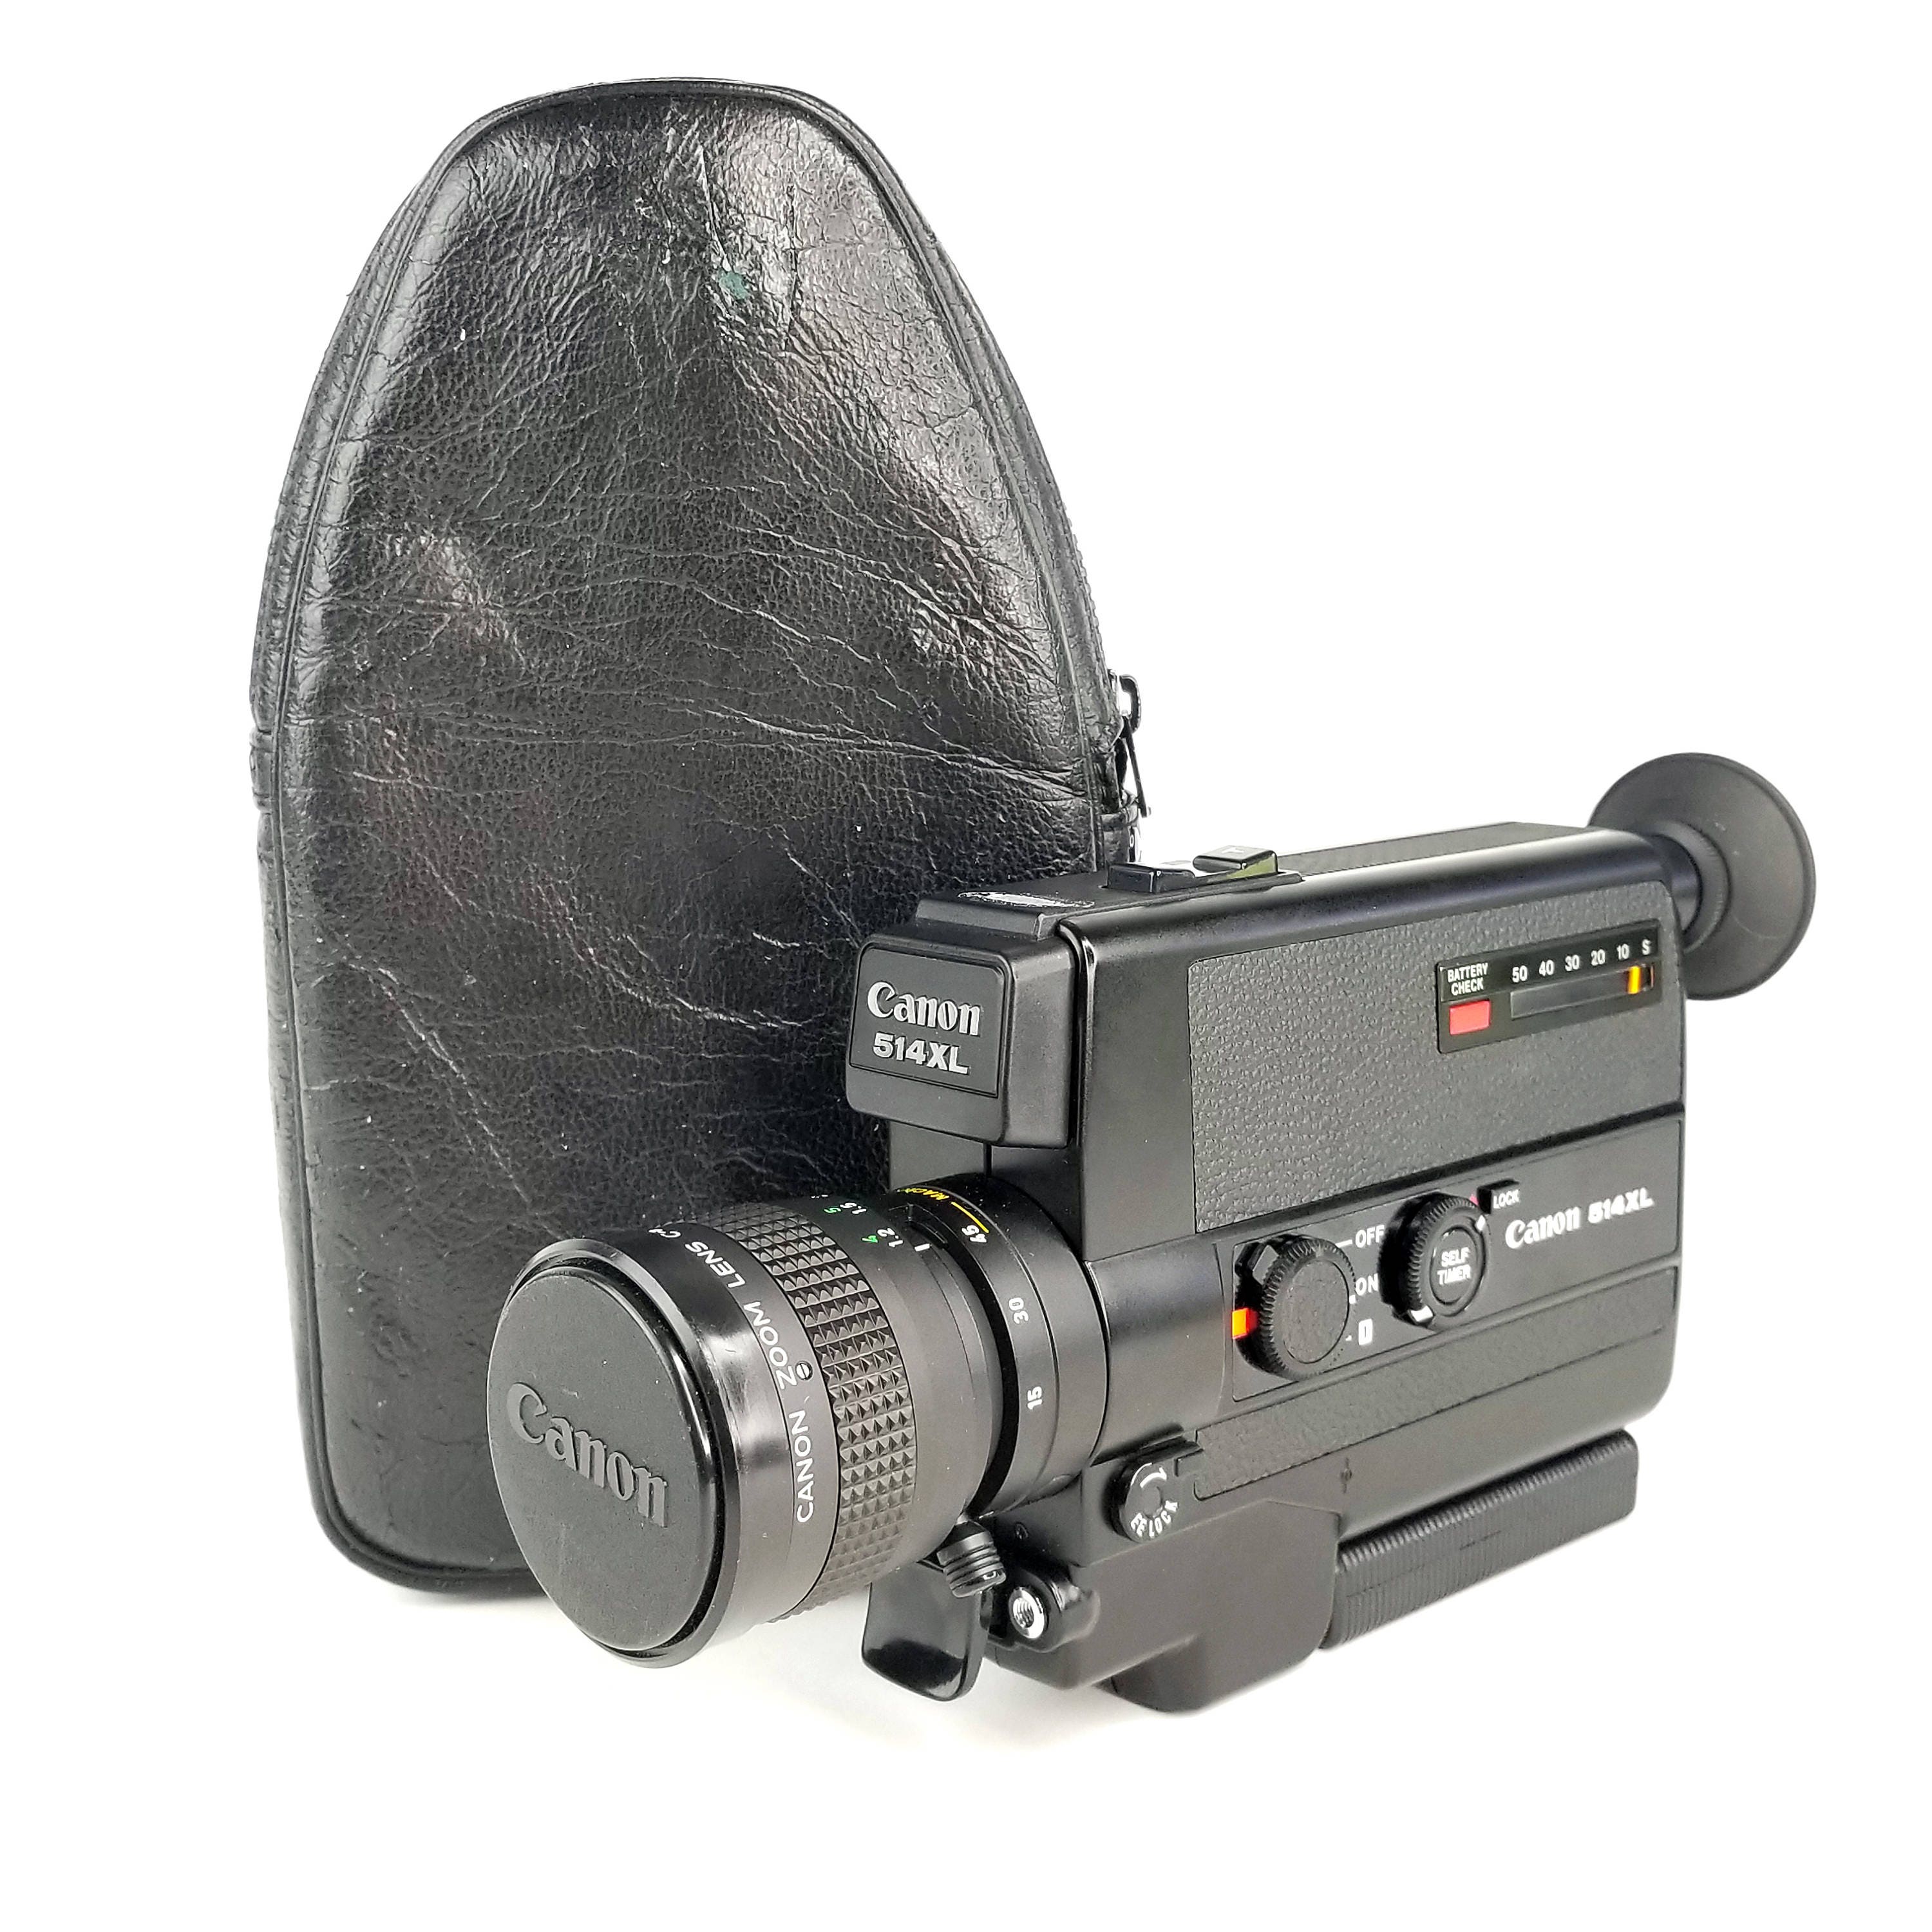 Canon 514XL PROFESSIONALLY SERVICED Super 8 Camera USA Seller | Etsy